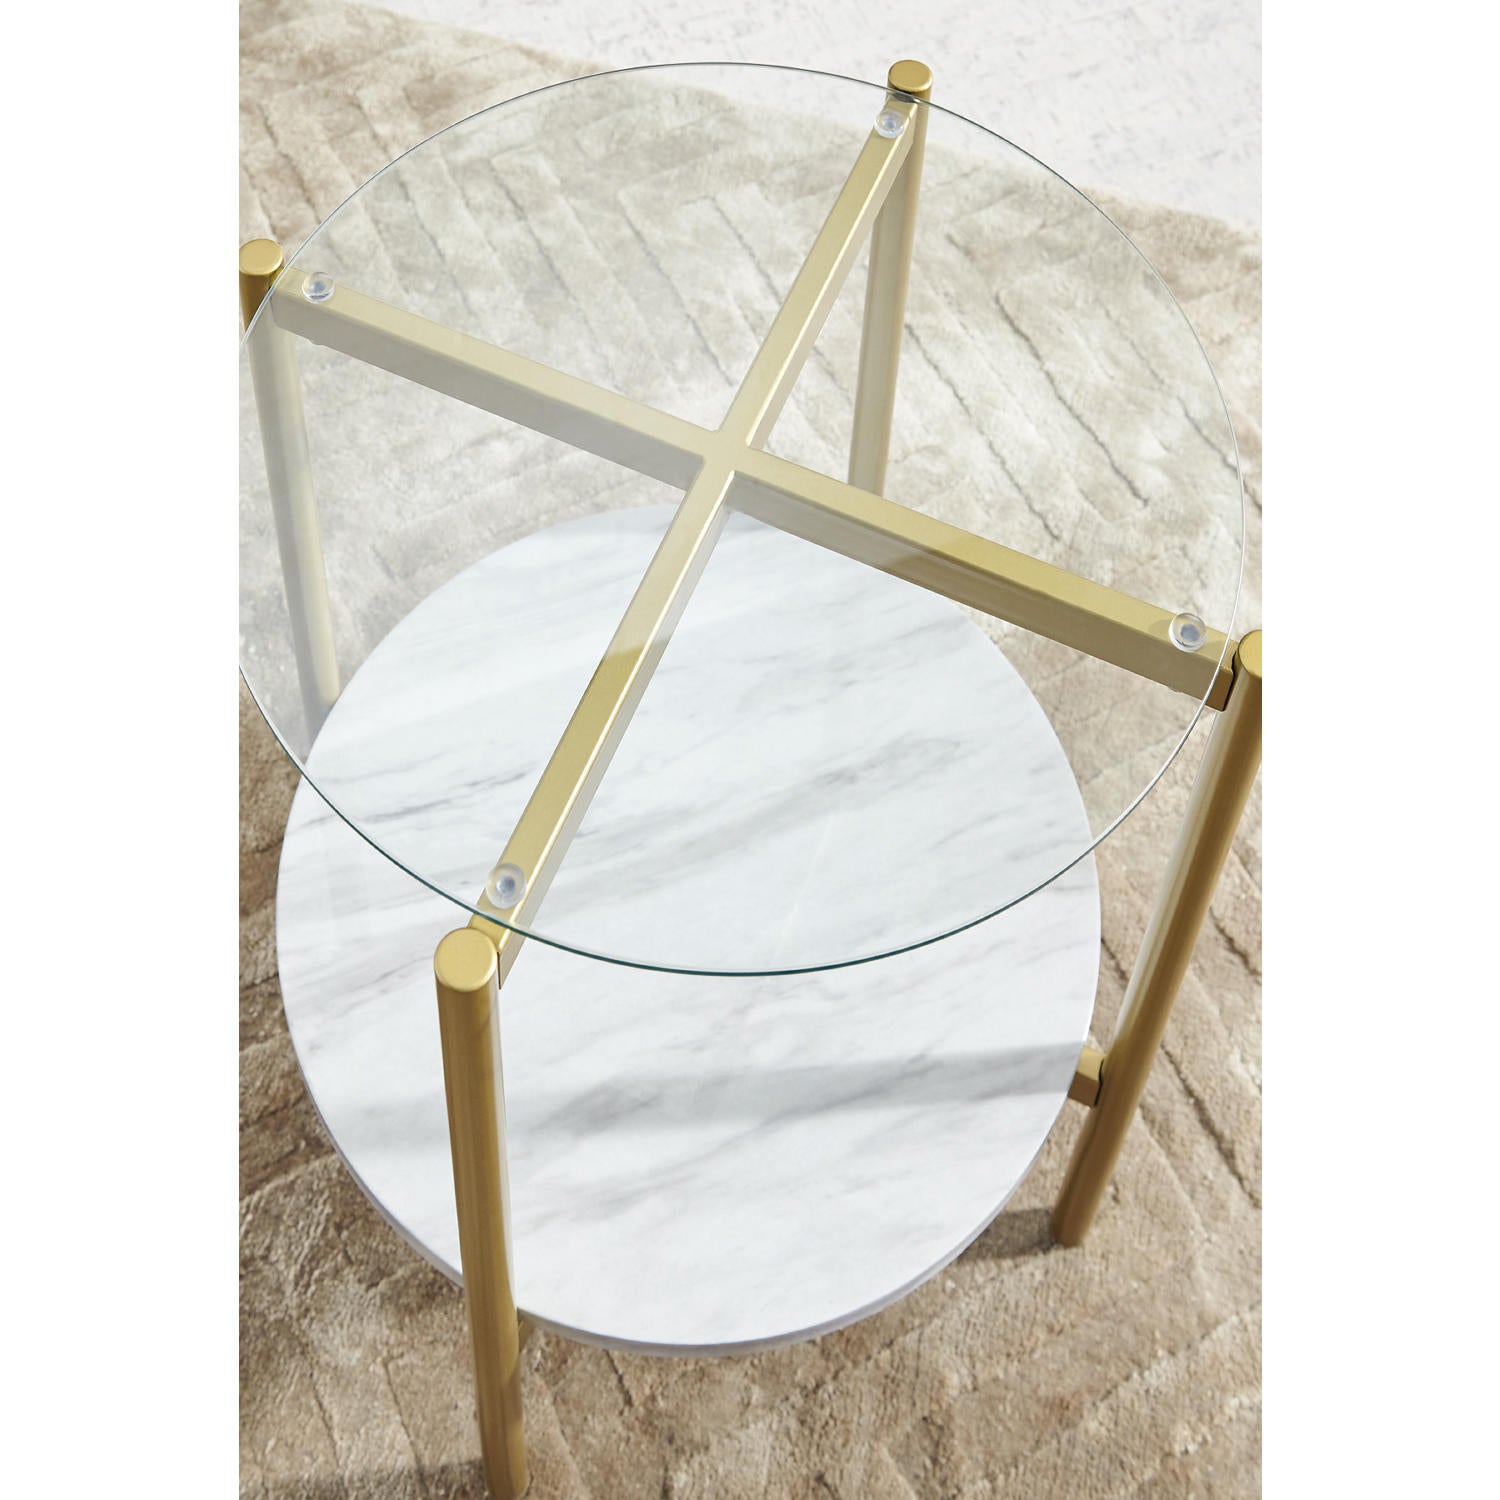 Wynora Round End Table - White/Gold